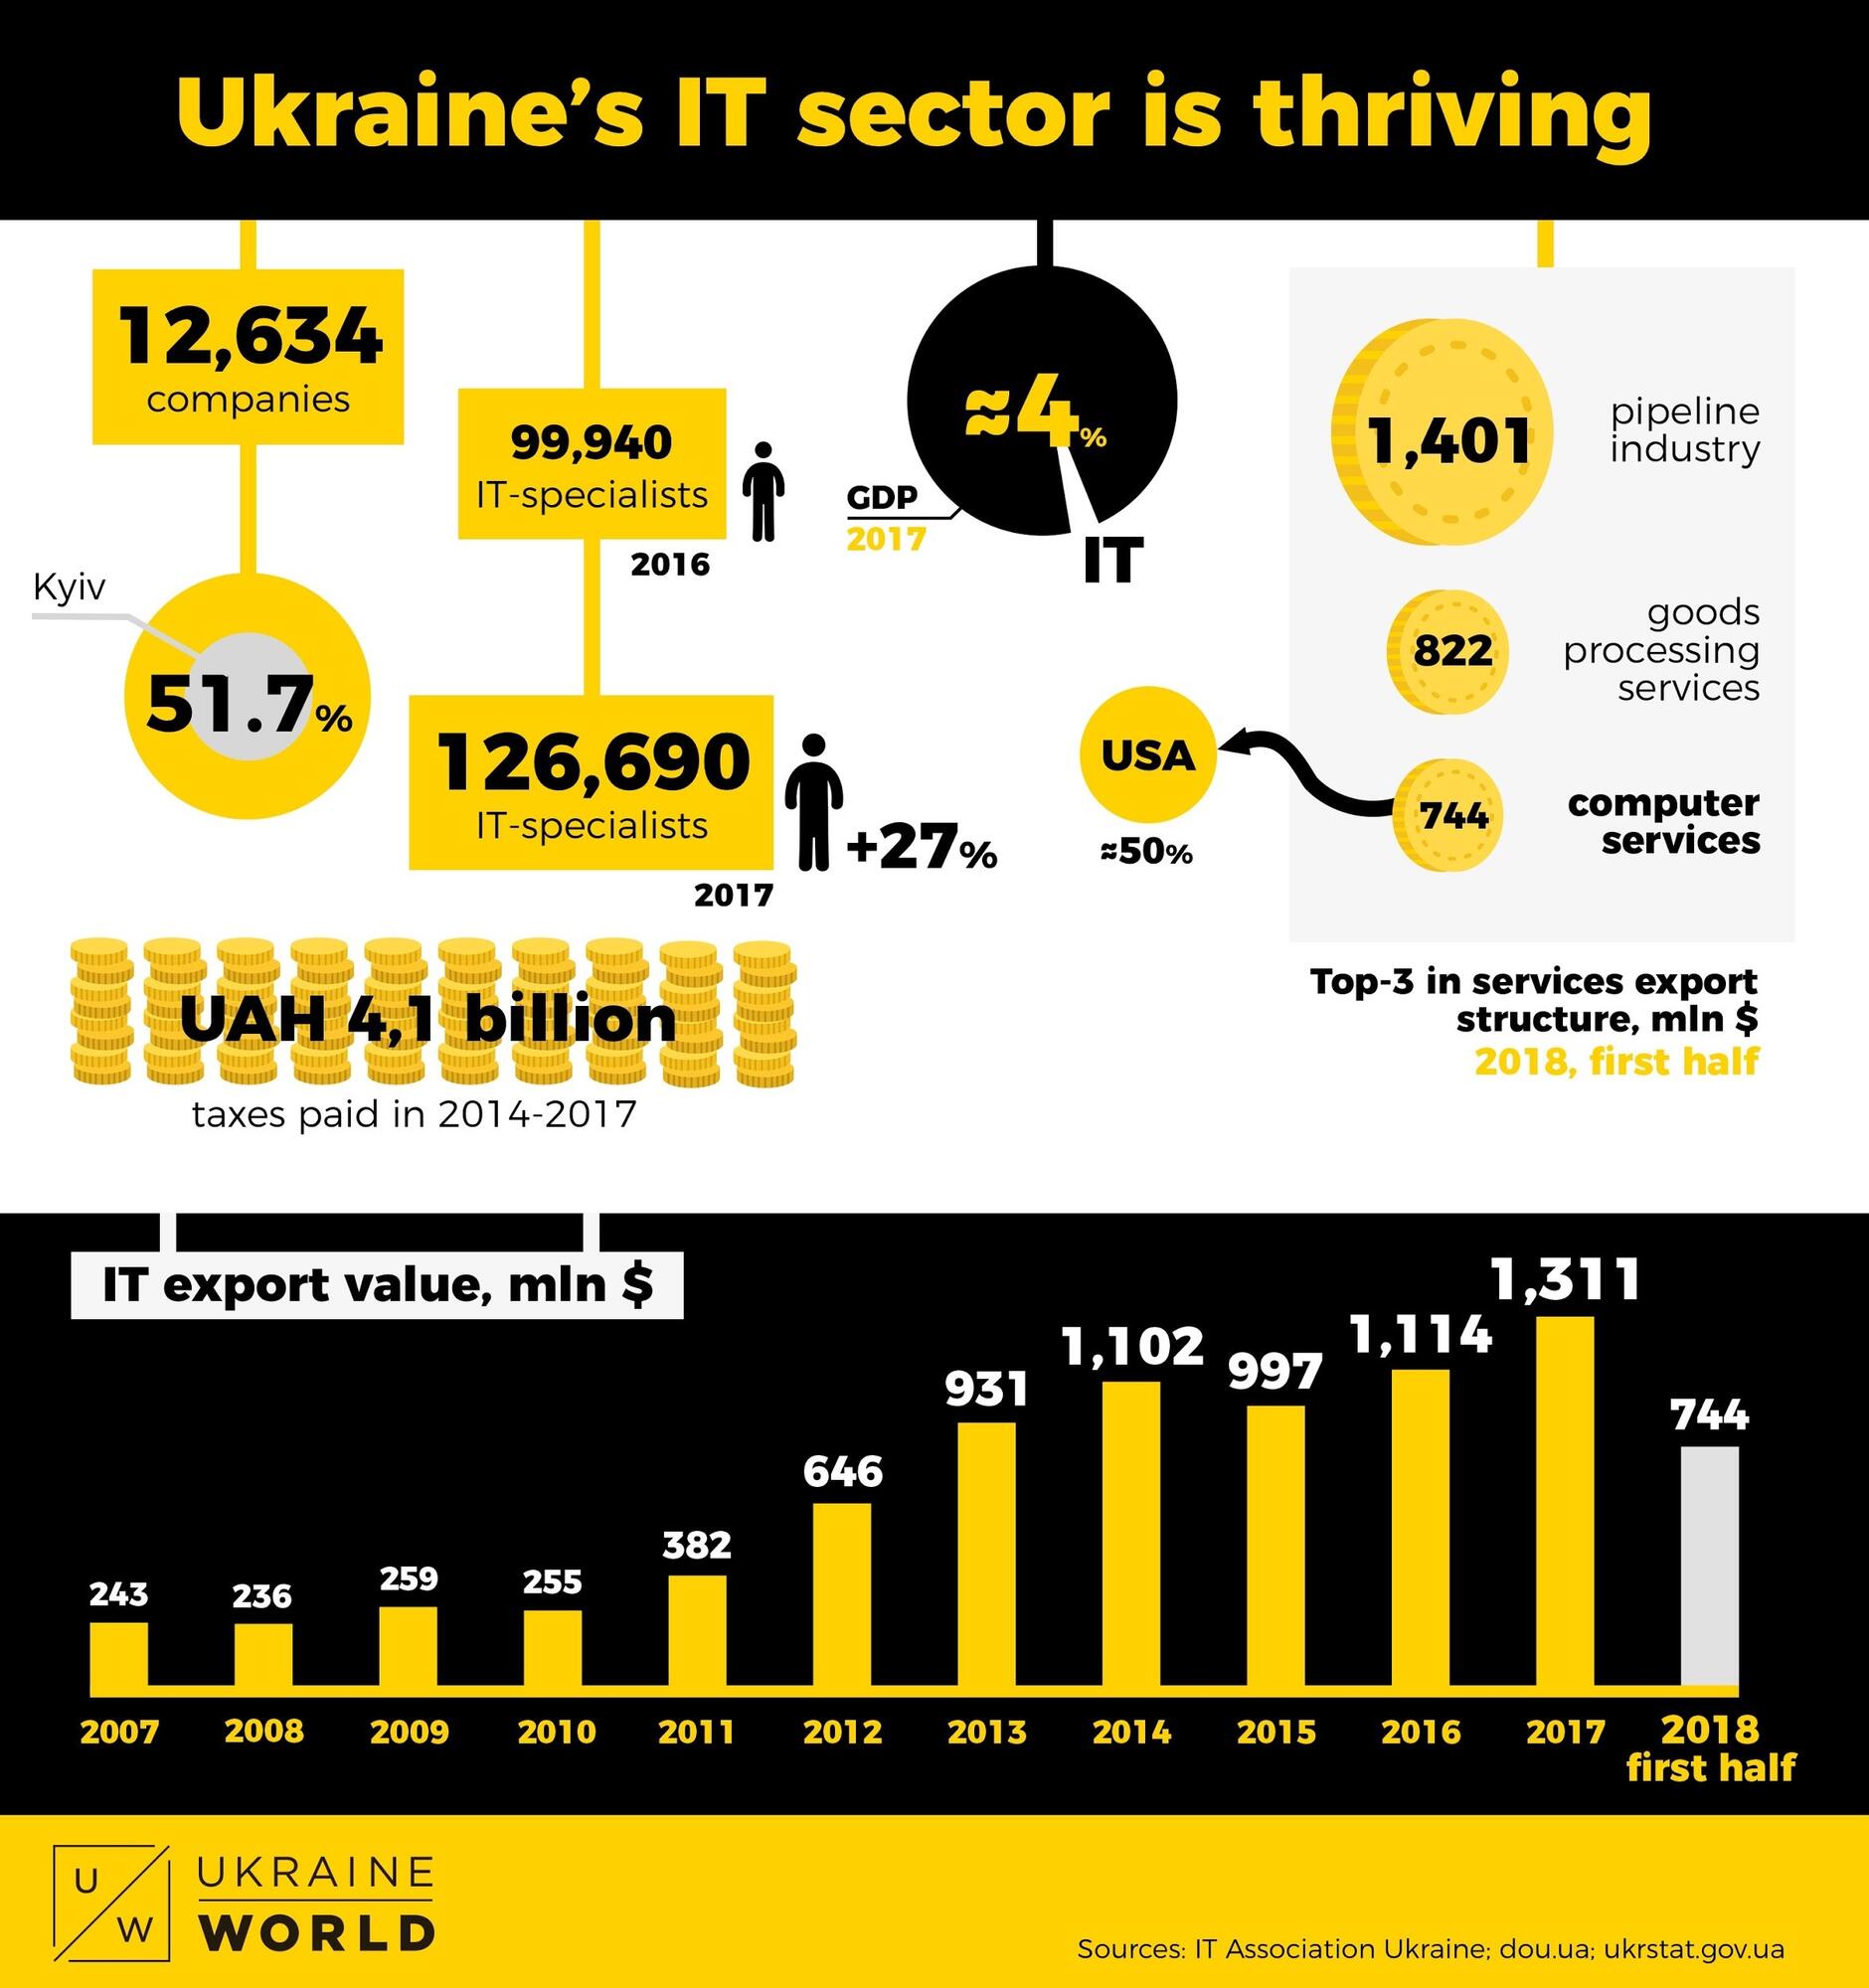 Infographic showing statistics of Ukraine's IT sector